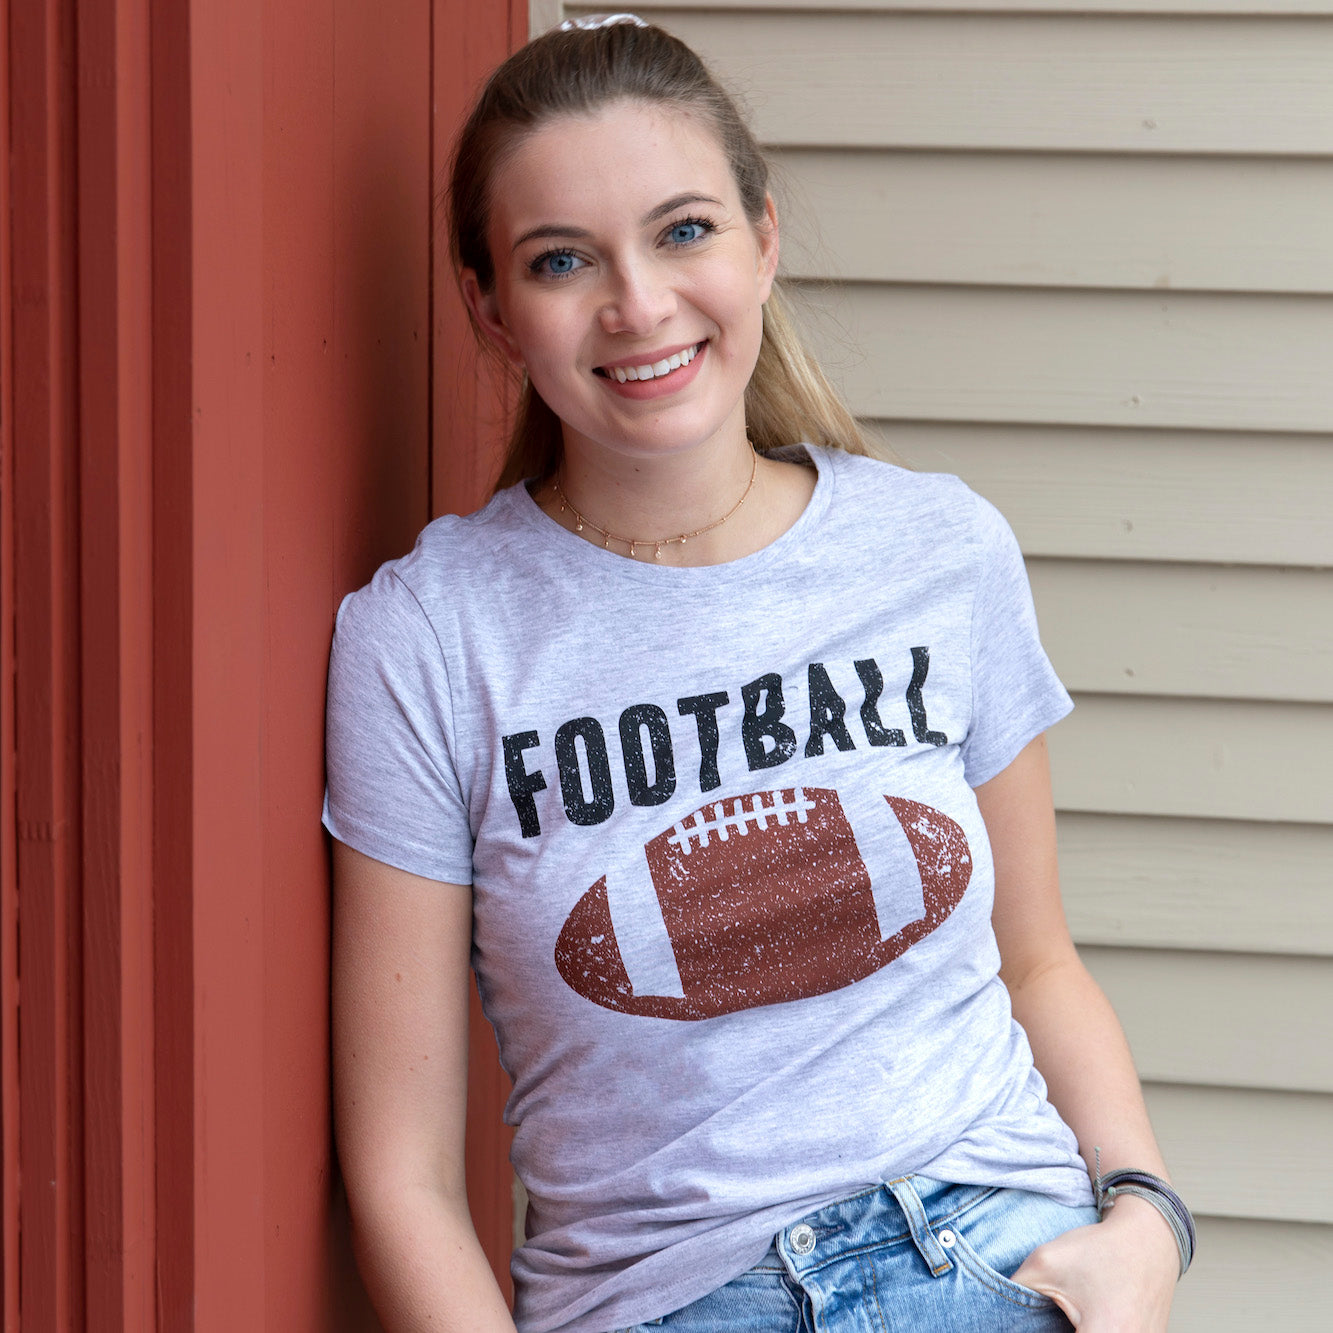 Funny Light Heather Grey Vintage Football Womens T Shirt Nerdy Football Retro Tee